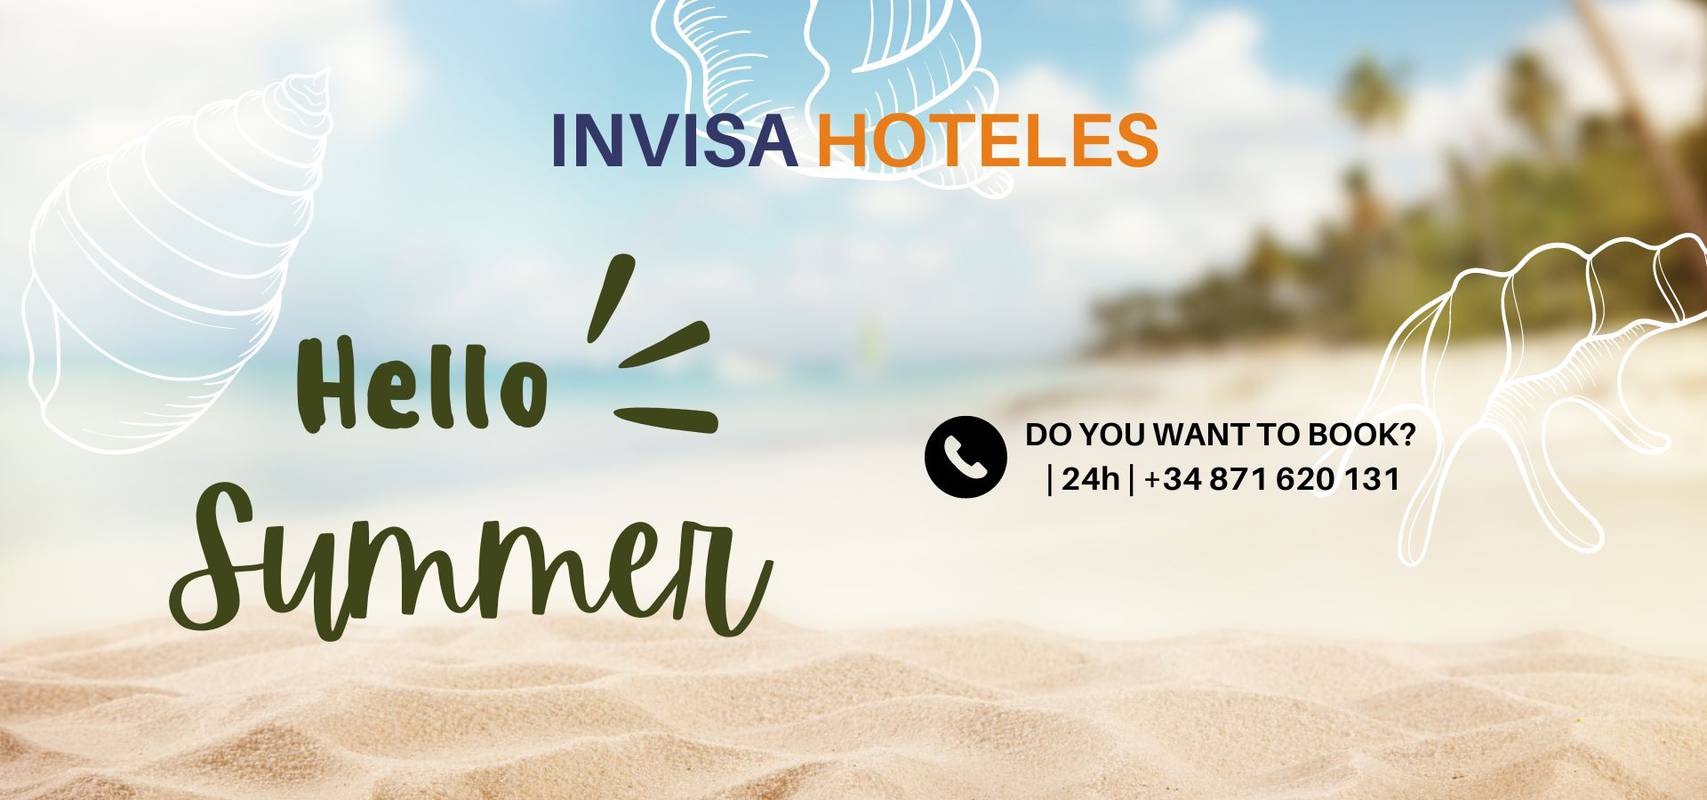  Invisa Hotels